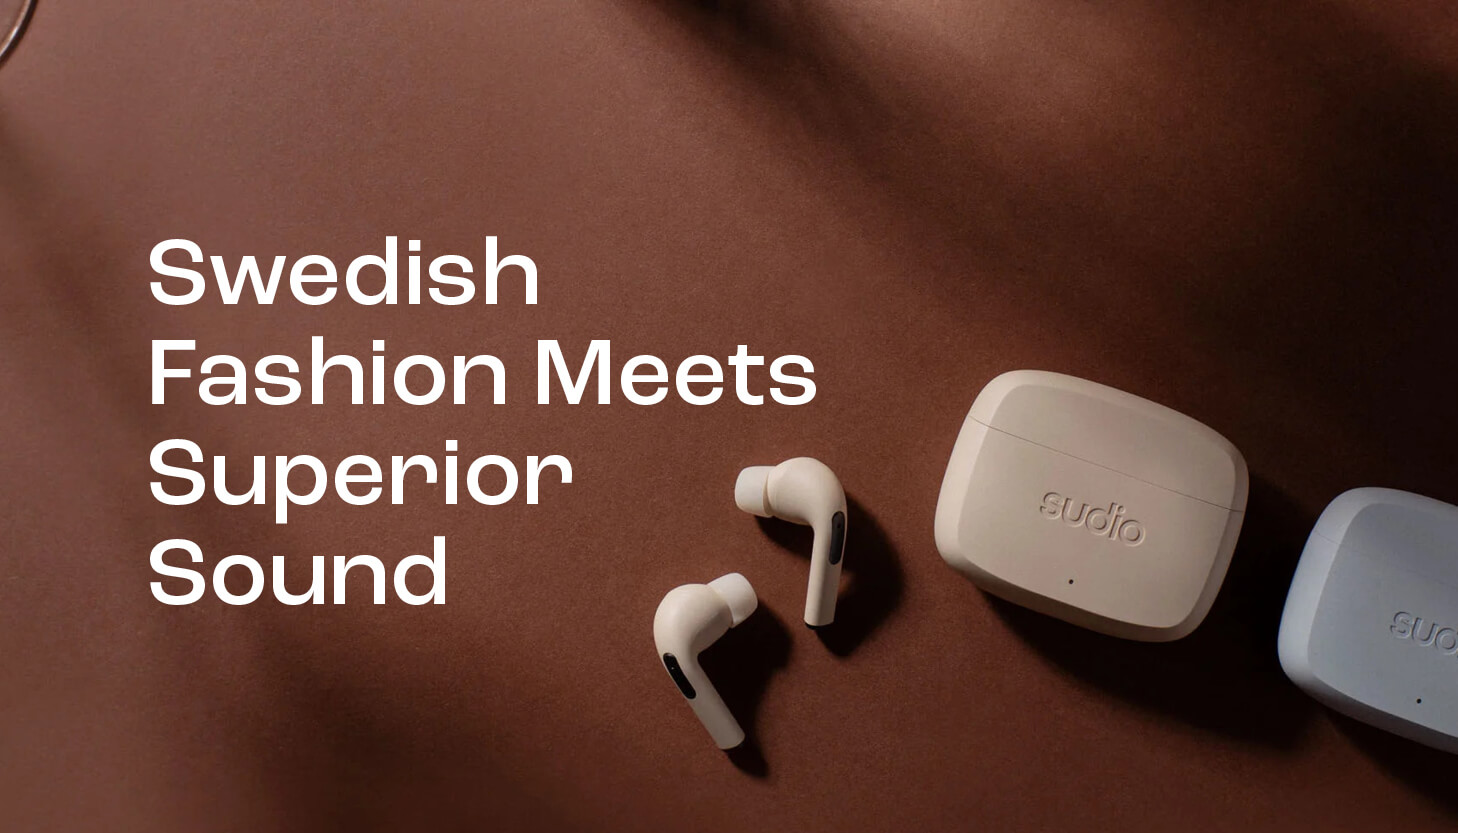 Swedish fashion meets superior sound.